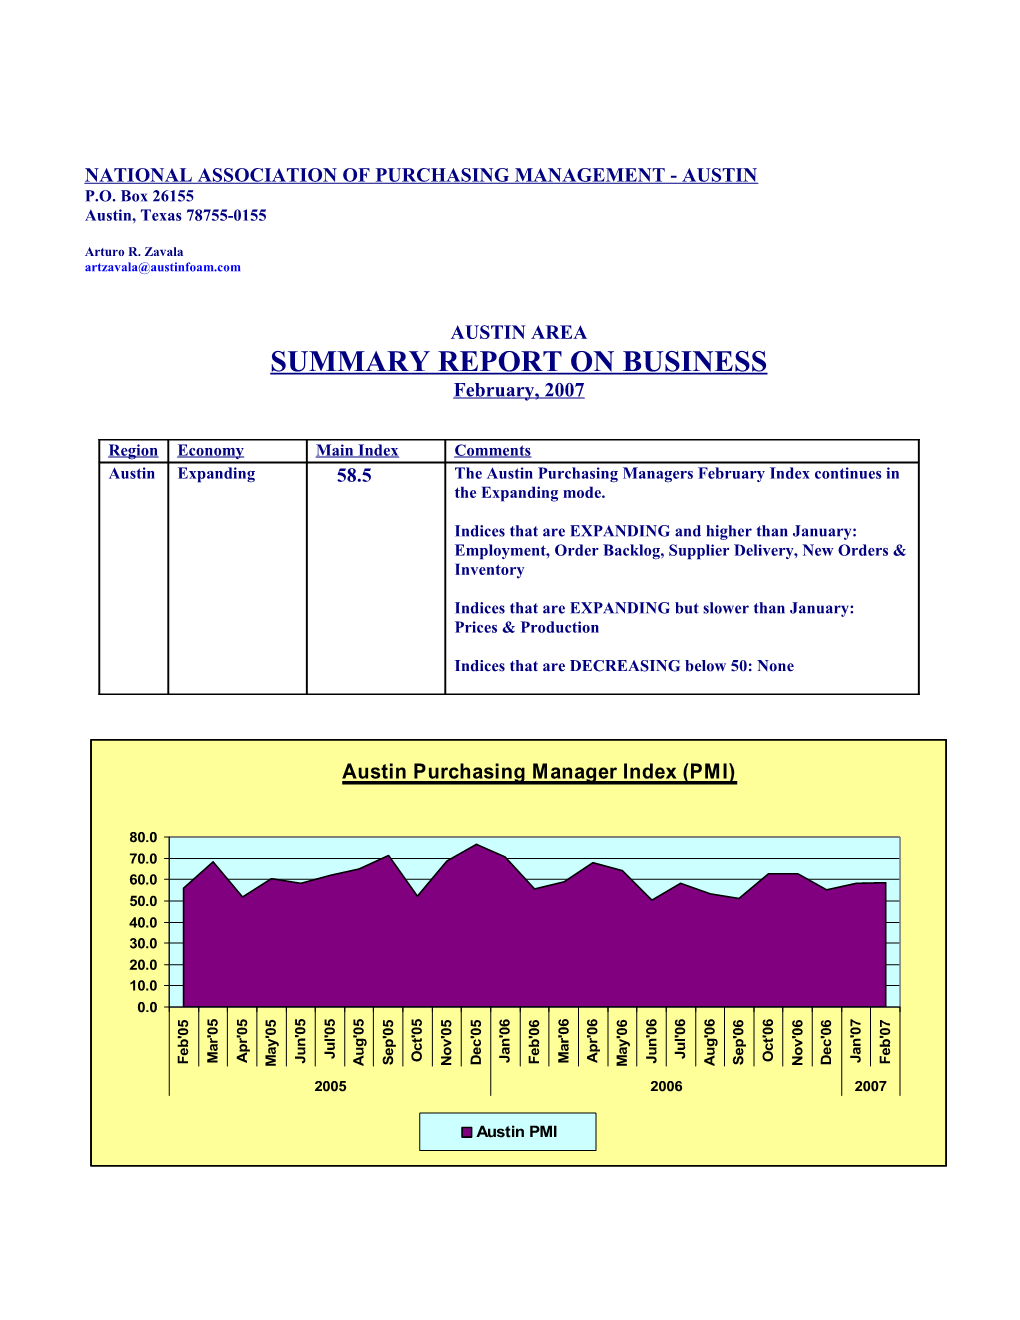 NAPM-Austin Report on Business Summary February 2007